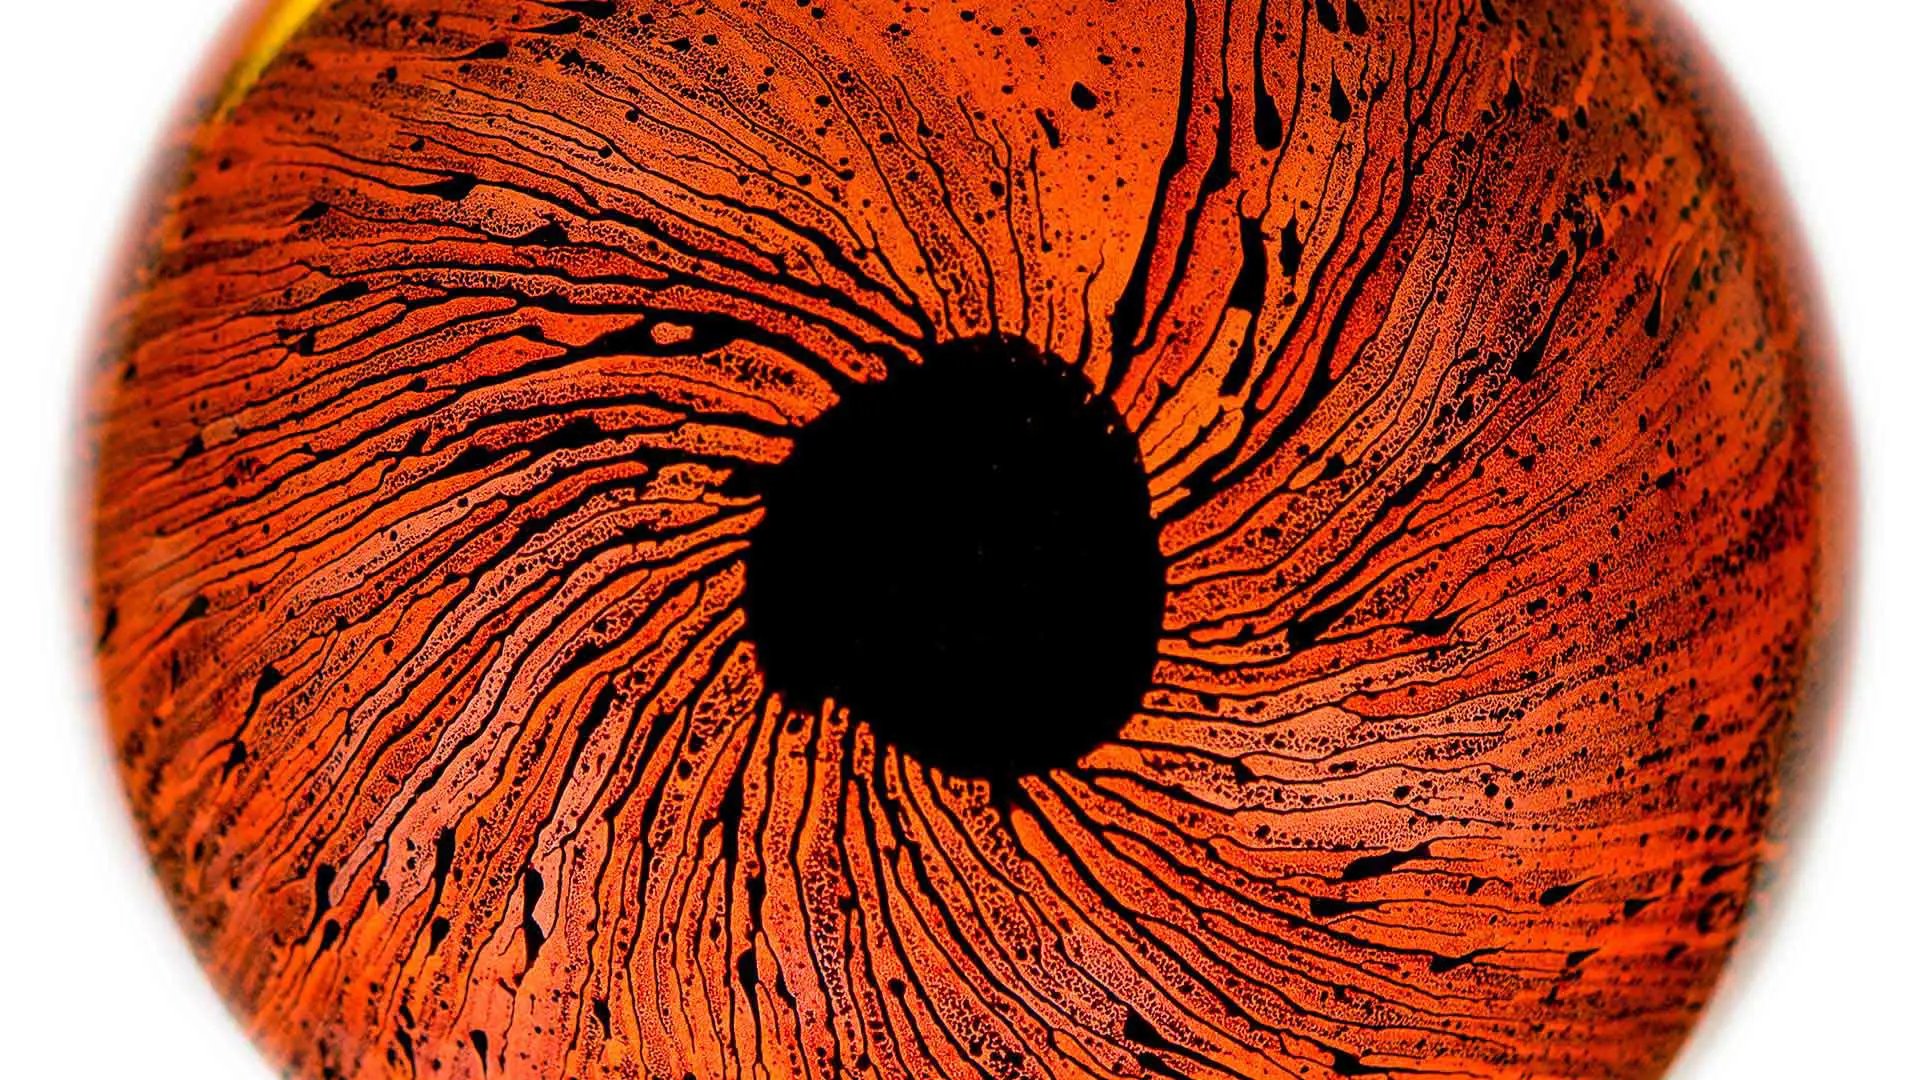 Vinnare 2018: "The eye of the rotary storm" av Petri Murto.